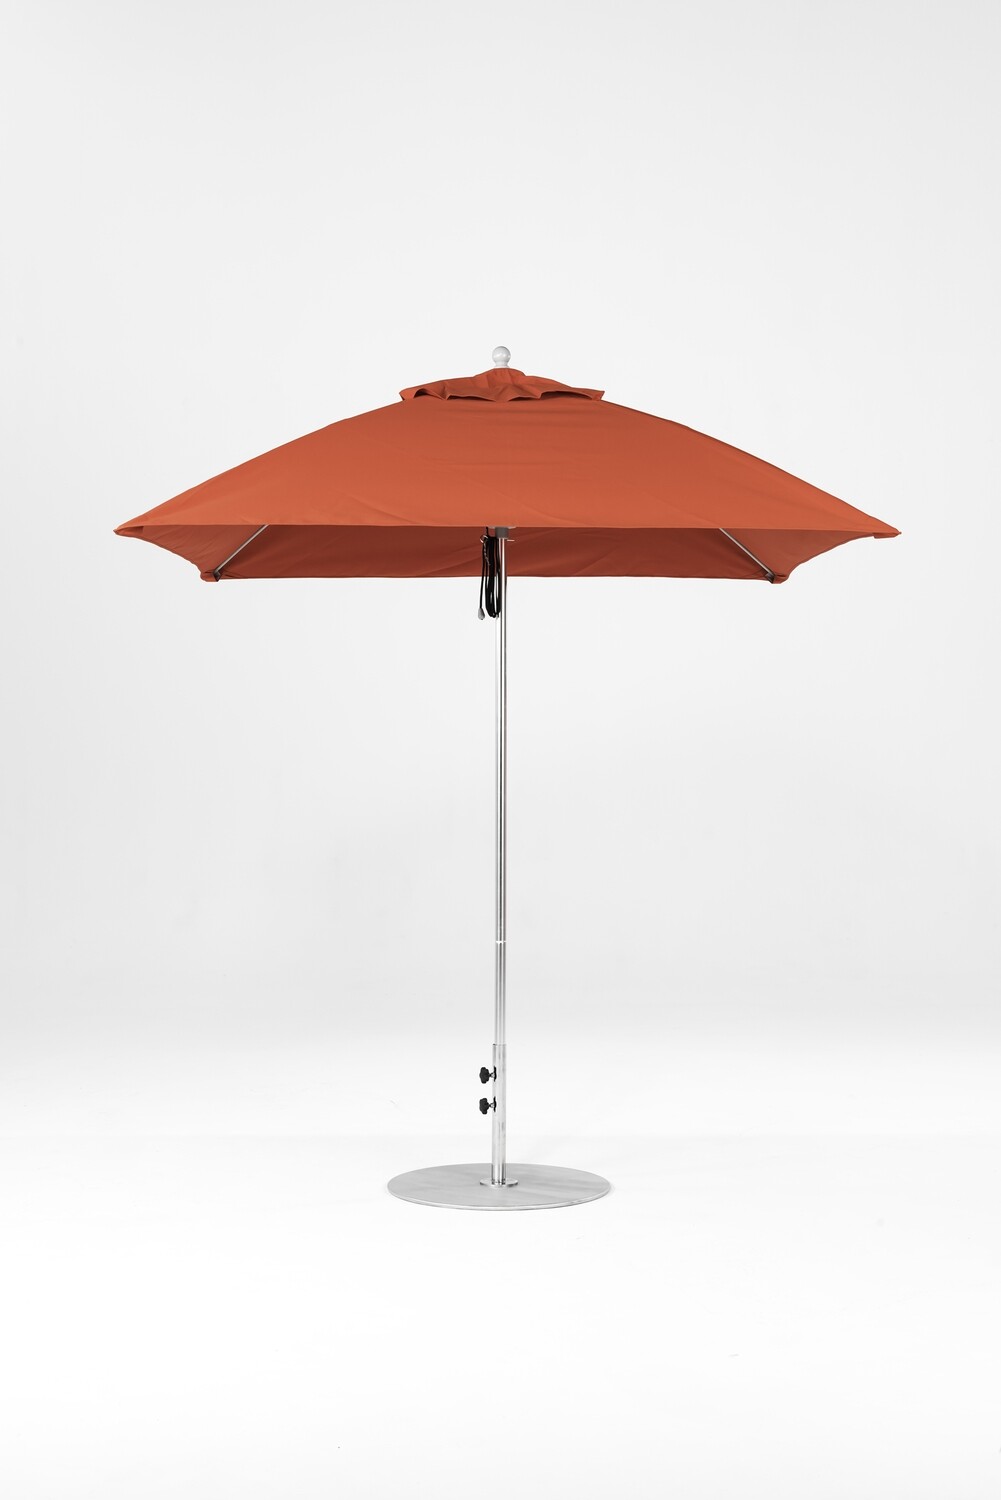 Monterey Square Fiberglass Market Umbrella with Pulley Lift